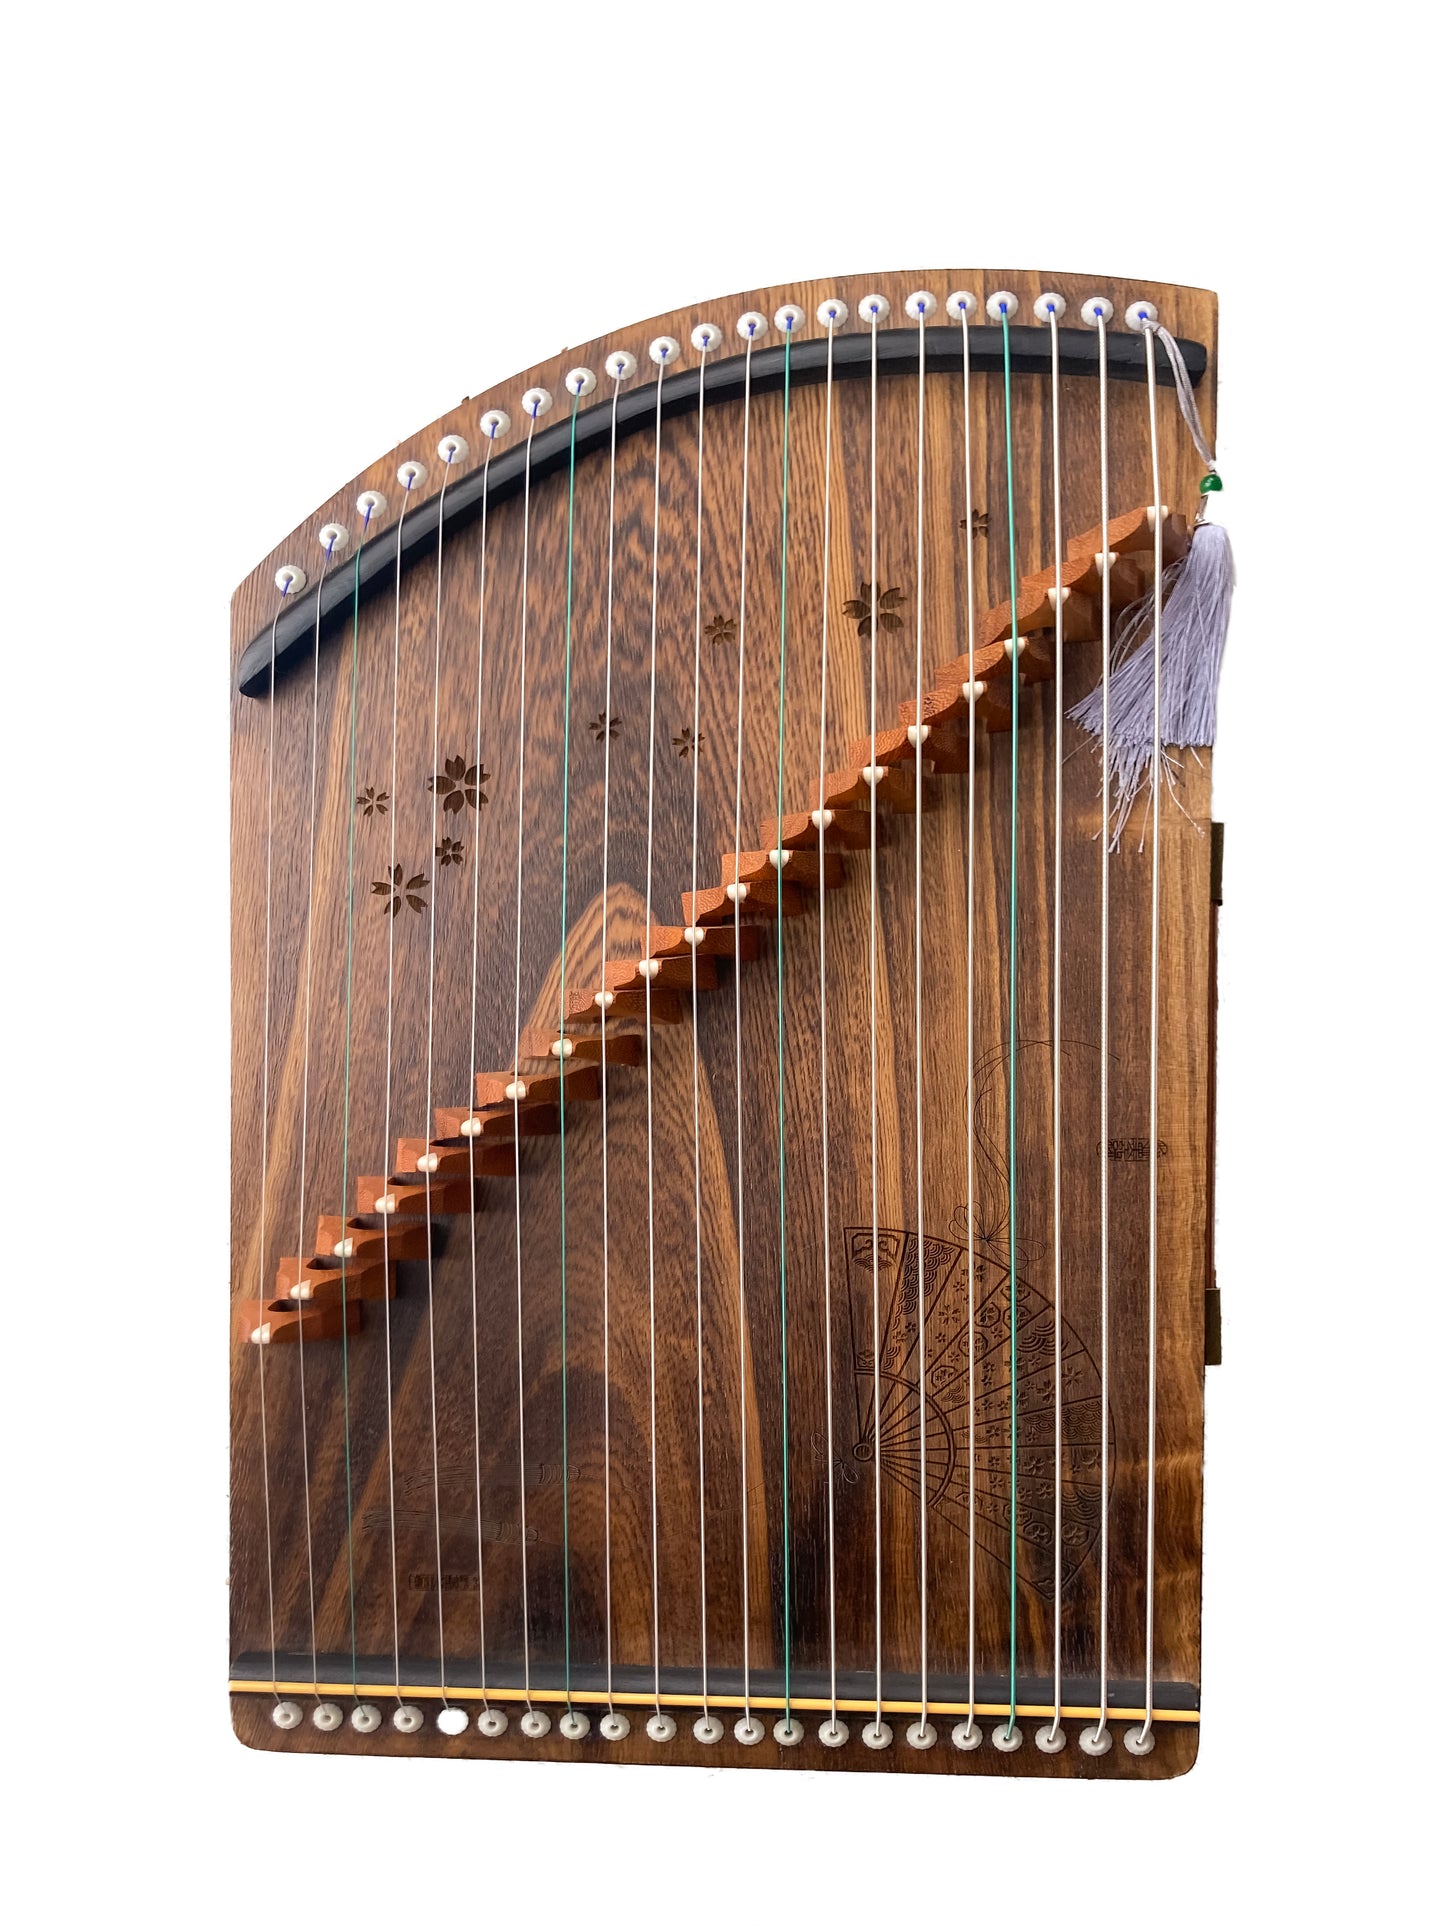 LANDTOM 5pcs special strings for MINI guzheng